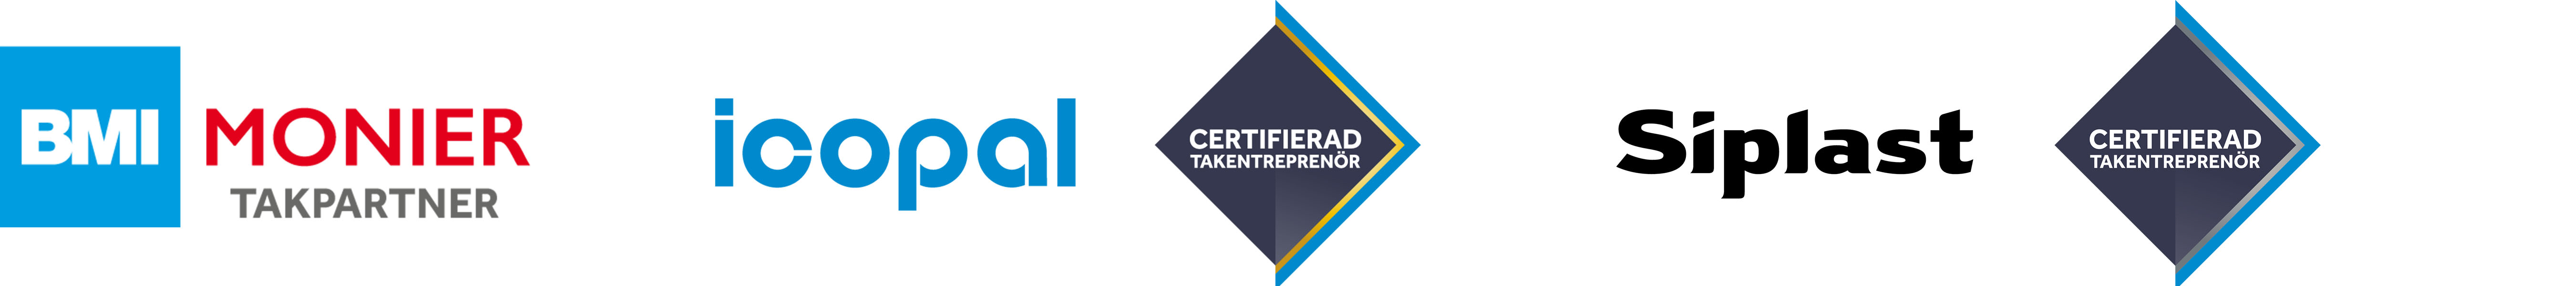 Logos: Monier Takpartner, Icopal Certifierad Takentreprenör, Siplast Certifierad Takentreprenör